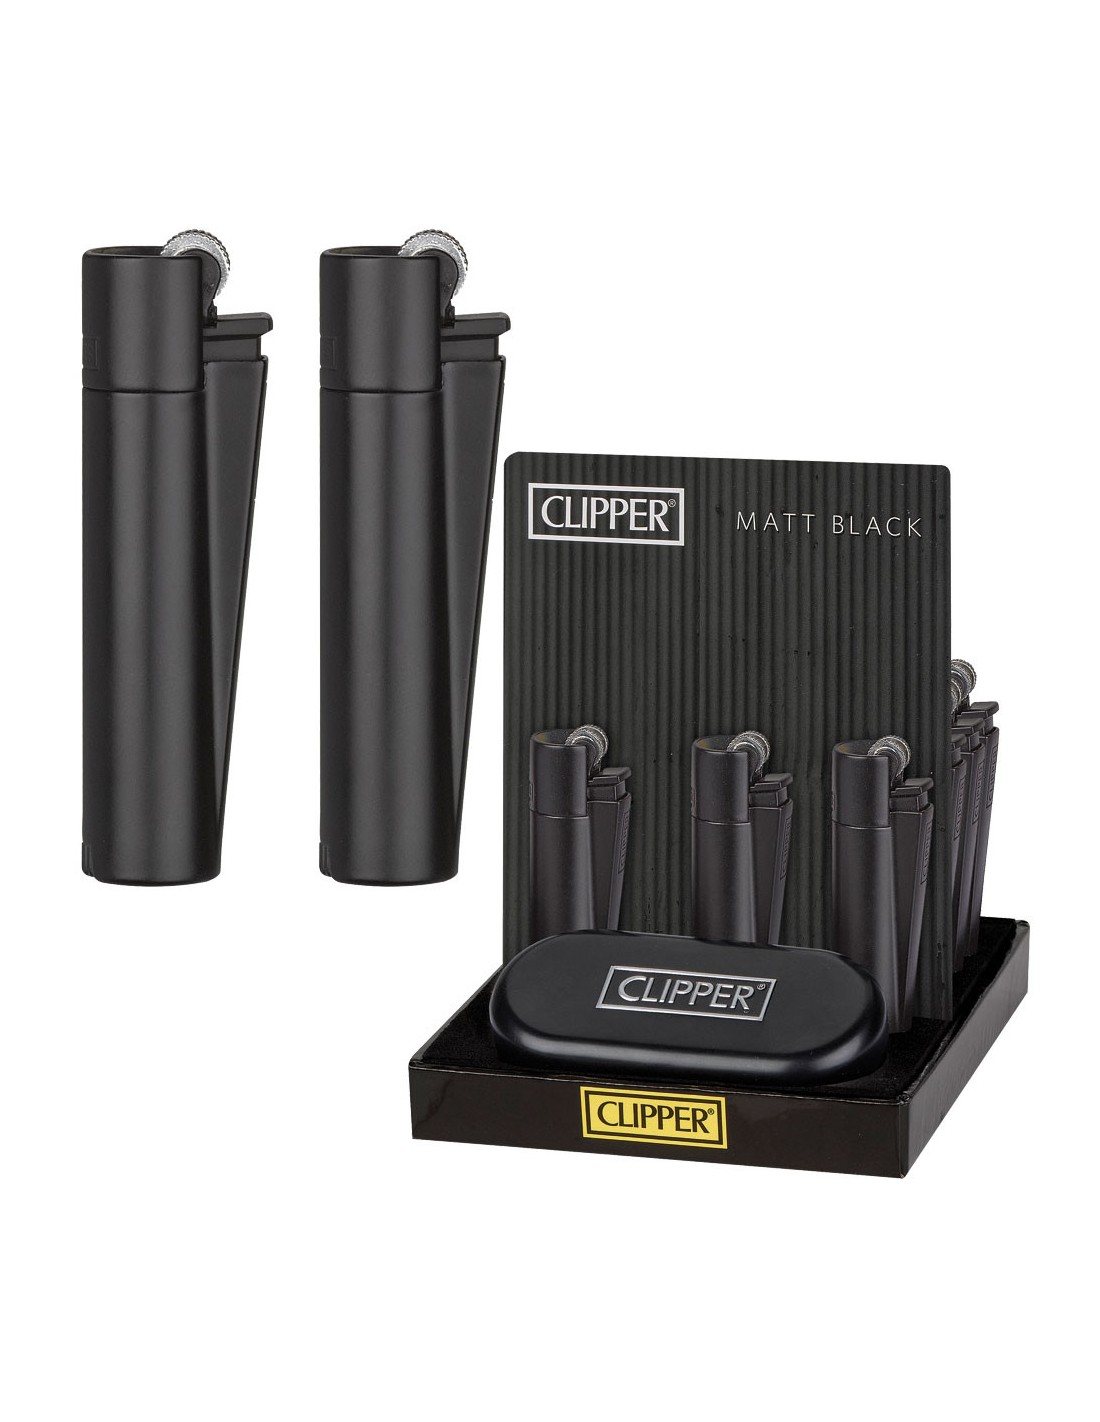 Accendino Clipper Large Metal MATT BLACK - Accendini Clipper